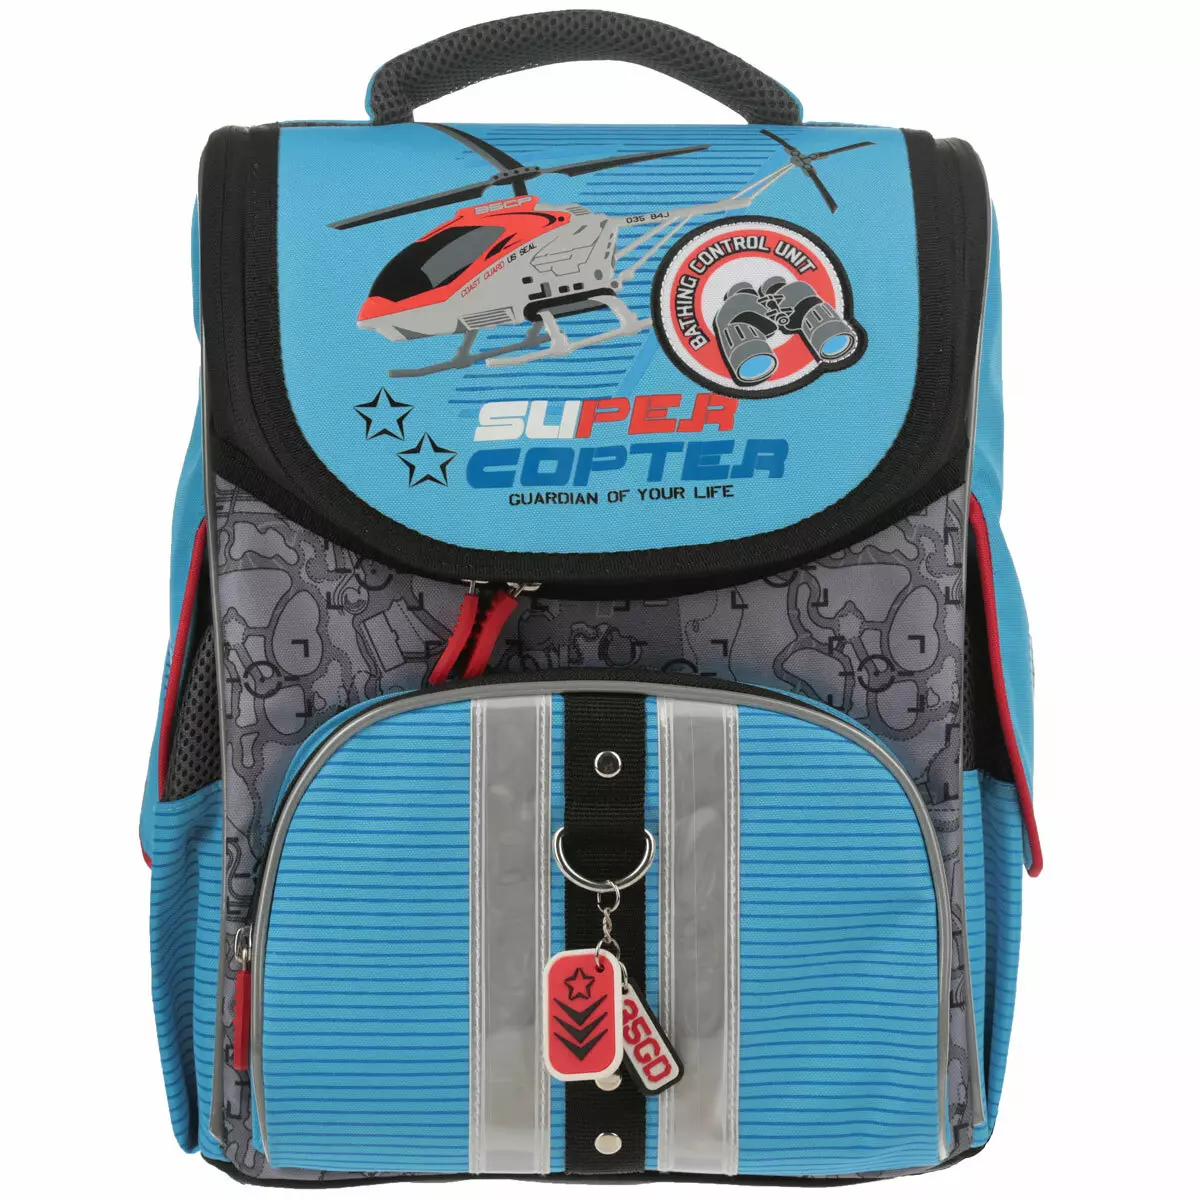 Backpacks ଏବଂ Erich Krause ପଦବାଚ୍ୟ: କାରଣ ବାଳିକା ବିଦ୍ୟାଳୟ backpacks ଏବଂ ପ୍ରଥମ-graders ବାଳକମାନଙ୍କୁ, teens, ergonomic ପୁନଃ ଅନ୍ୟମାନଙ୍କ ସହିତ backpacks ପାଇଁ 15465_62